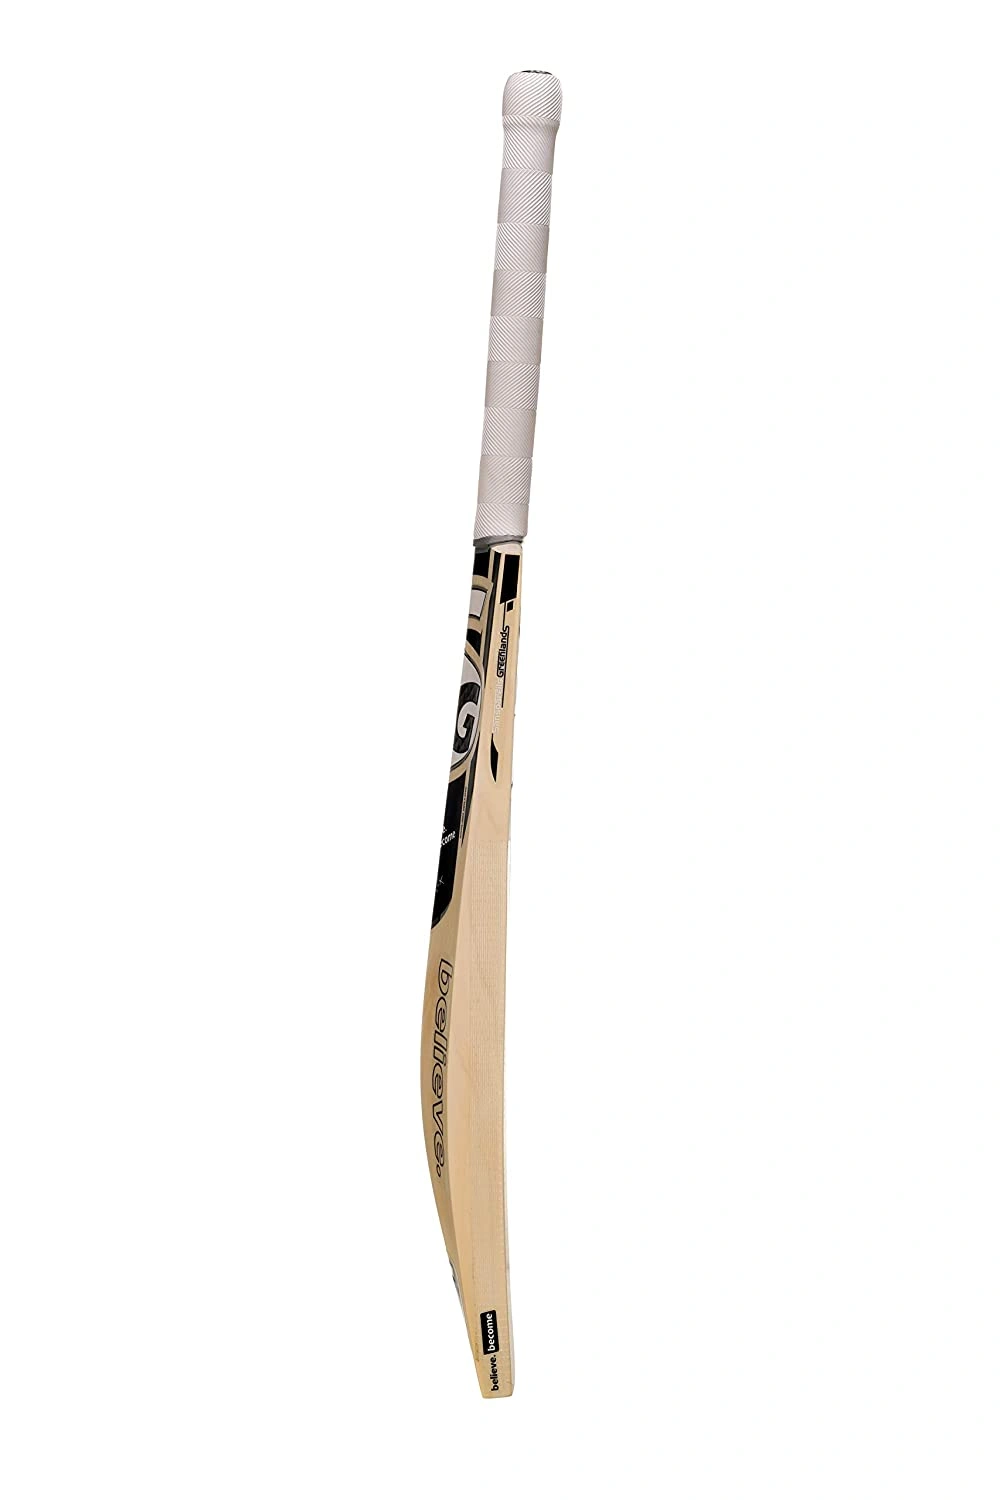 SG Roar Xtreme Grade 2 English Willow Cricket Bat-FS-2